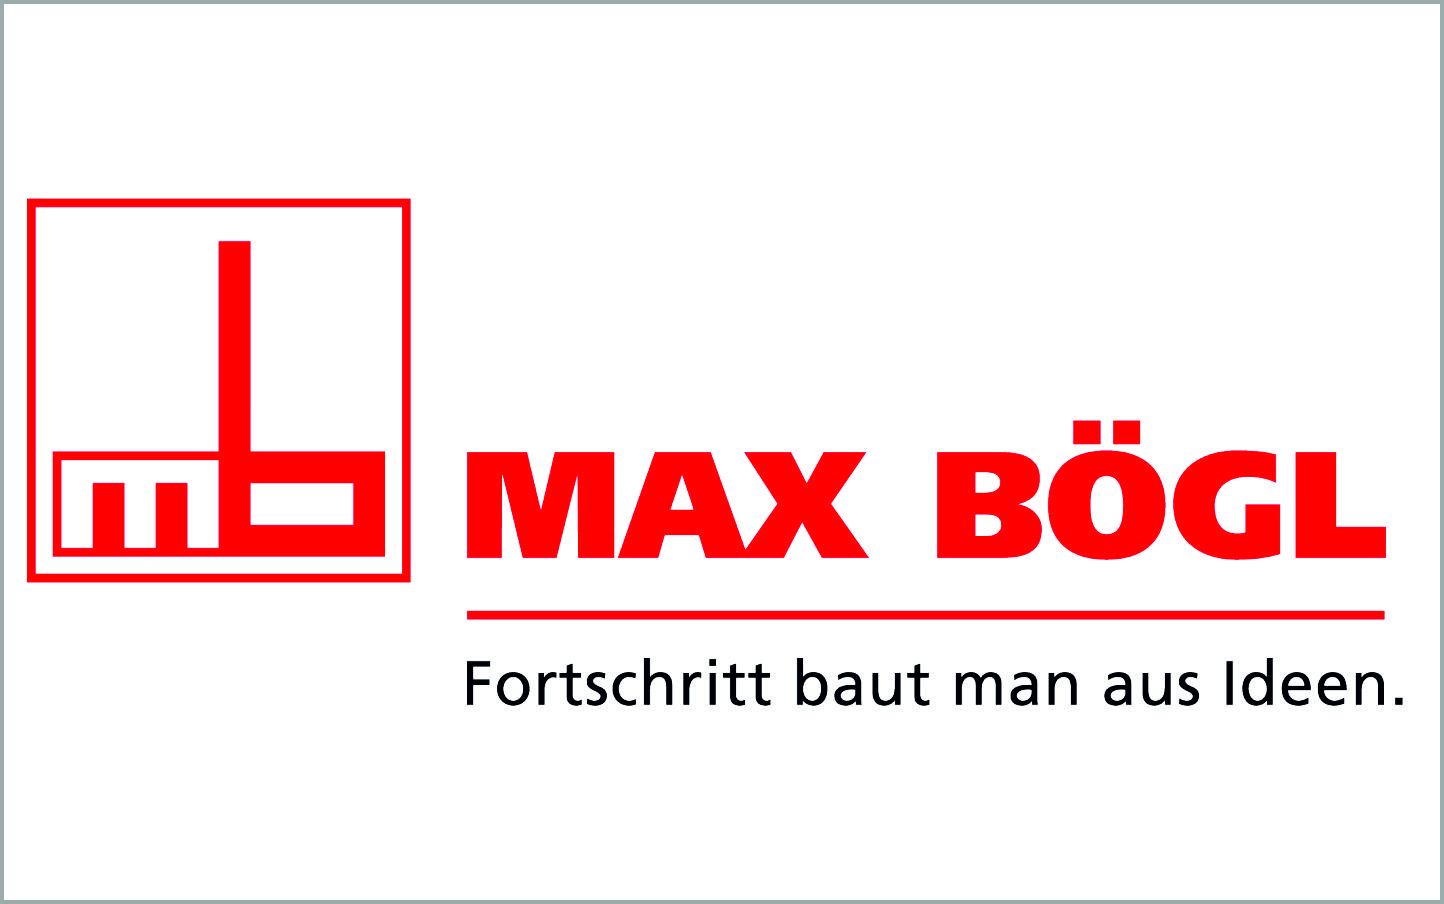 Max Bögl